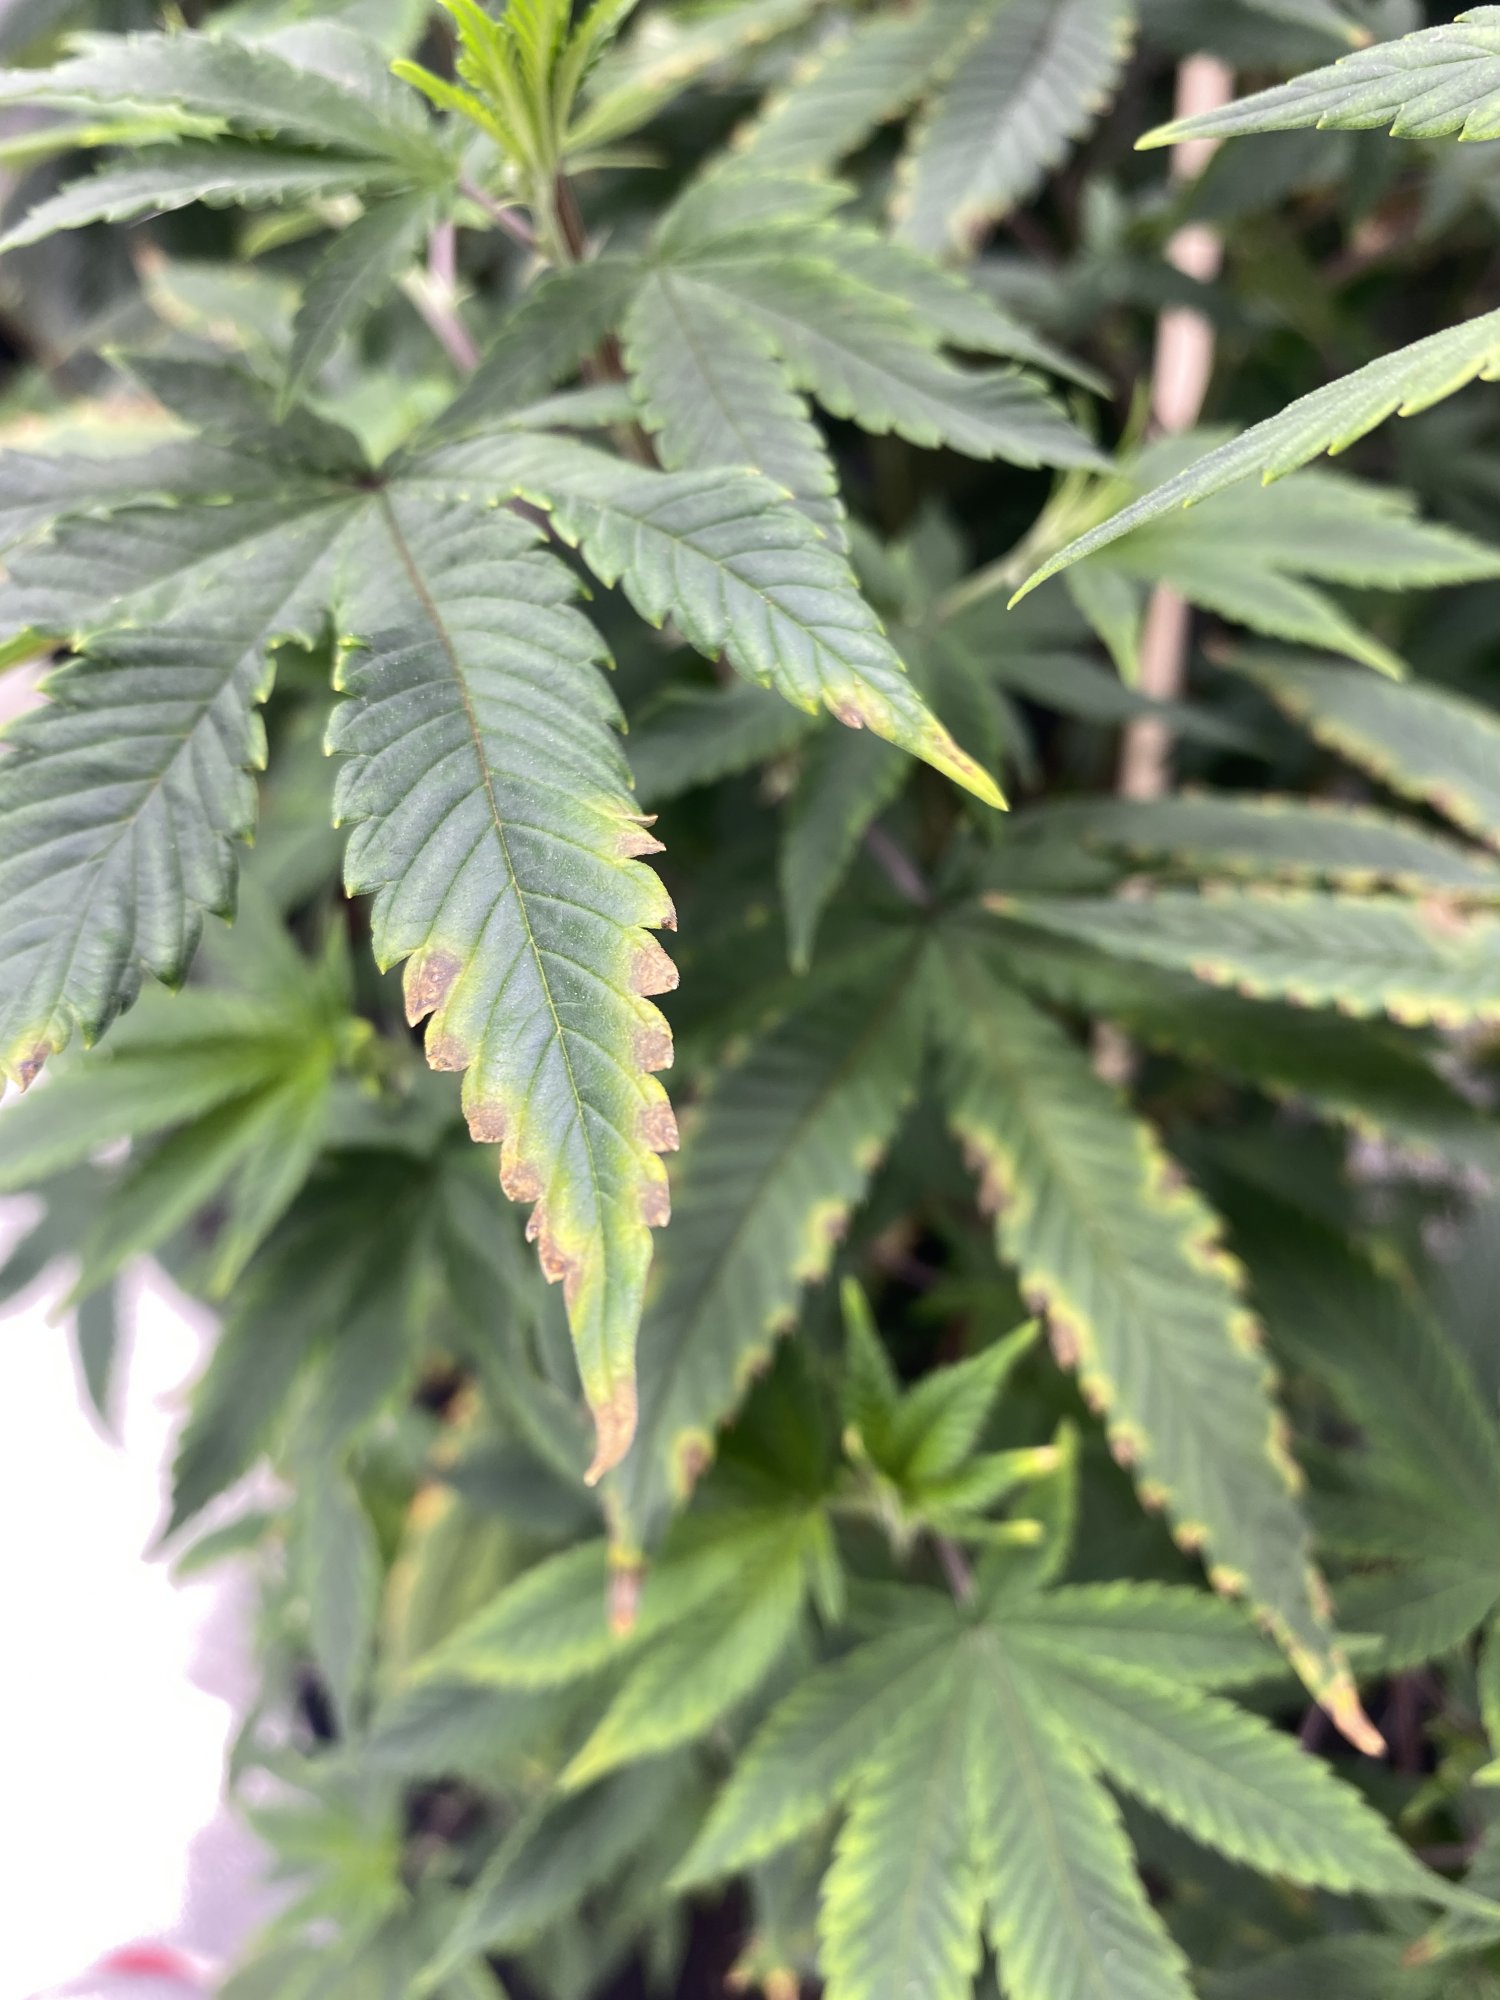 Help  new grower sick plant 2